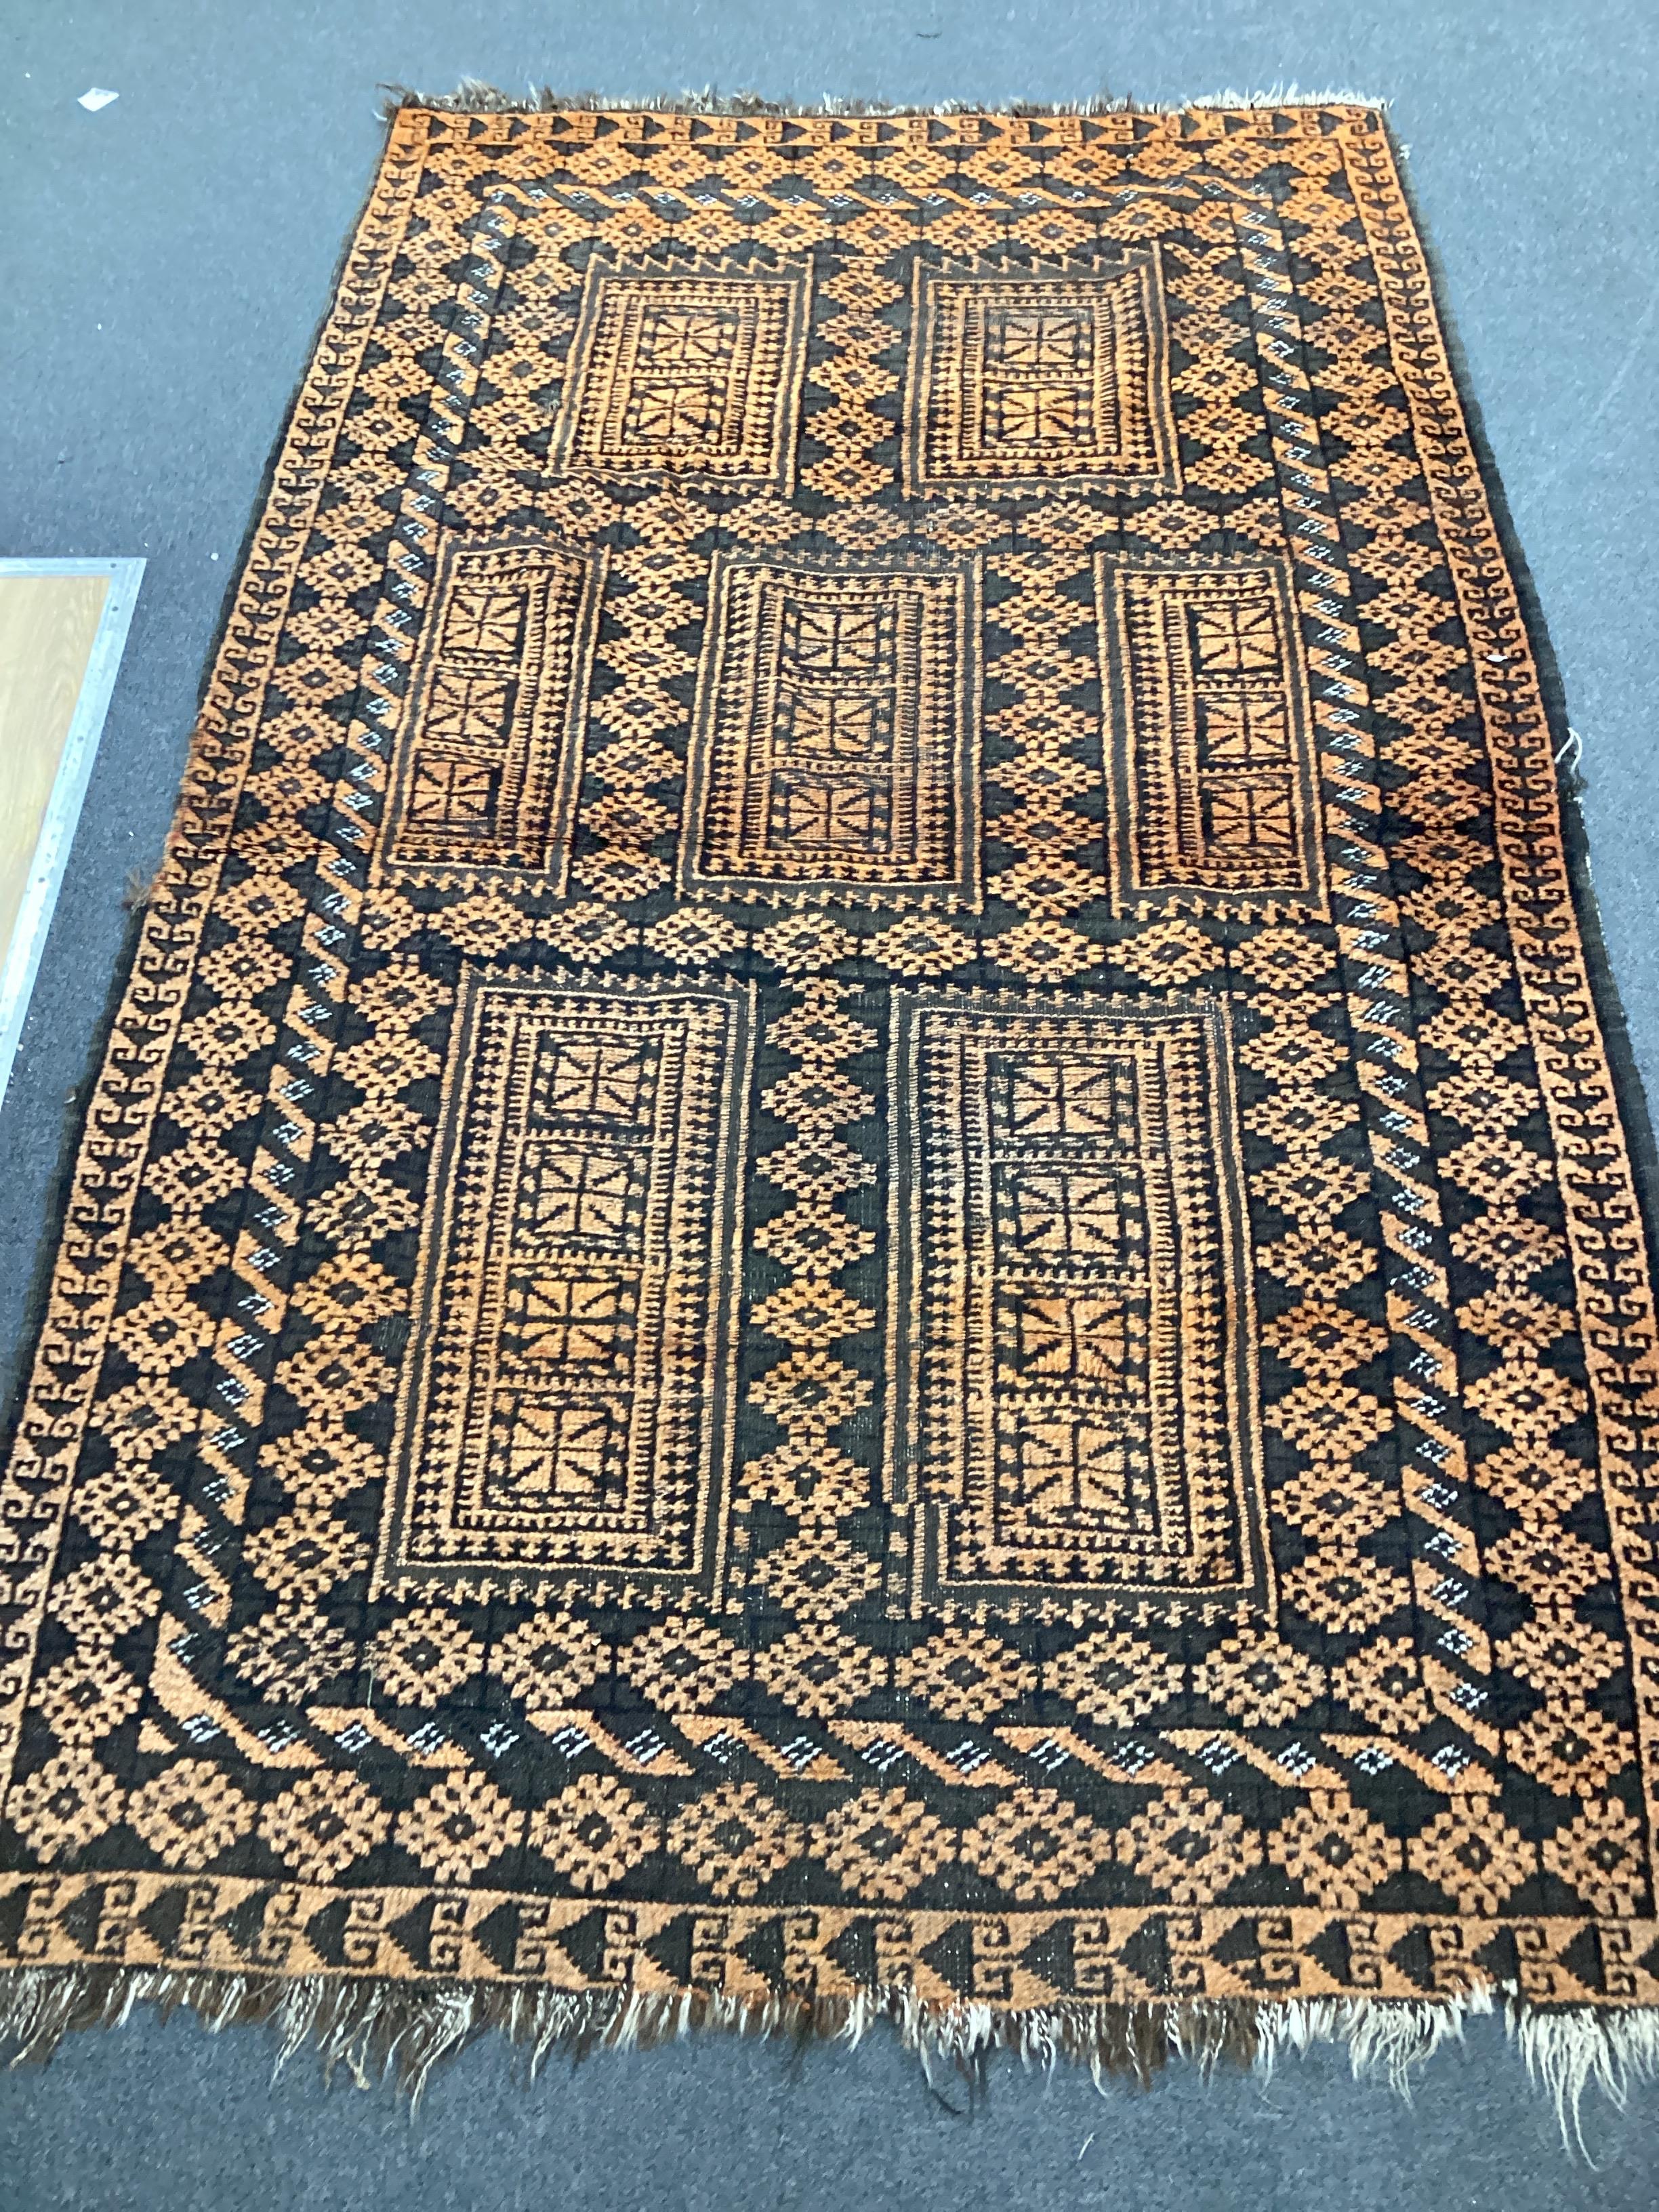 An Afghan geometric rug, 205cm x 138cm                                                                                                                                                                                      